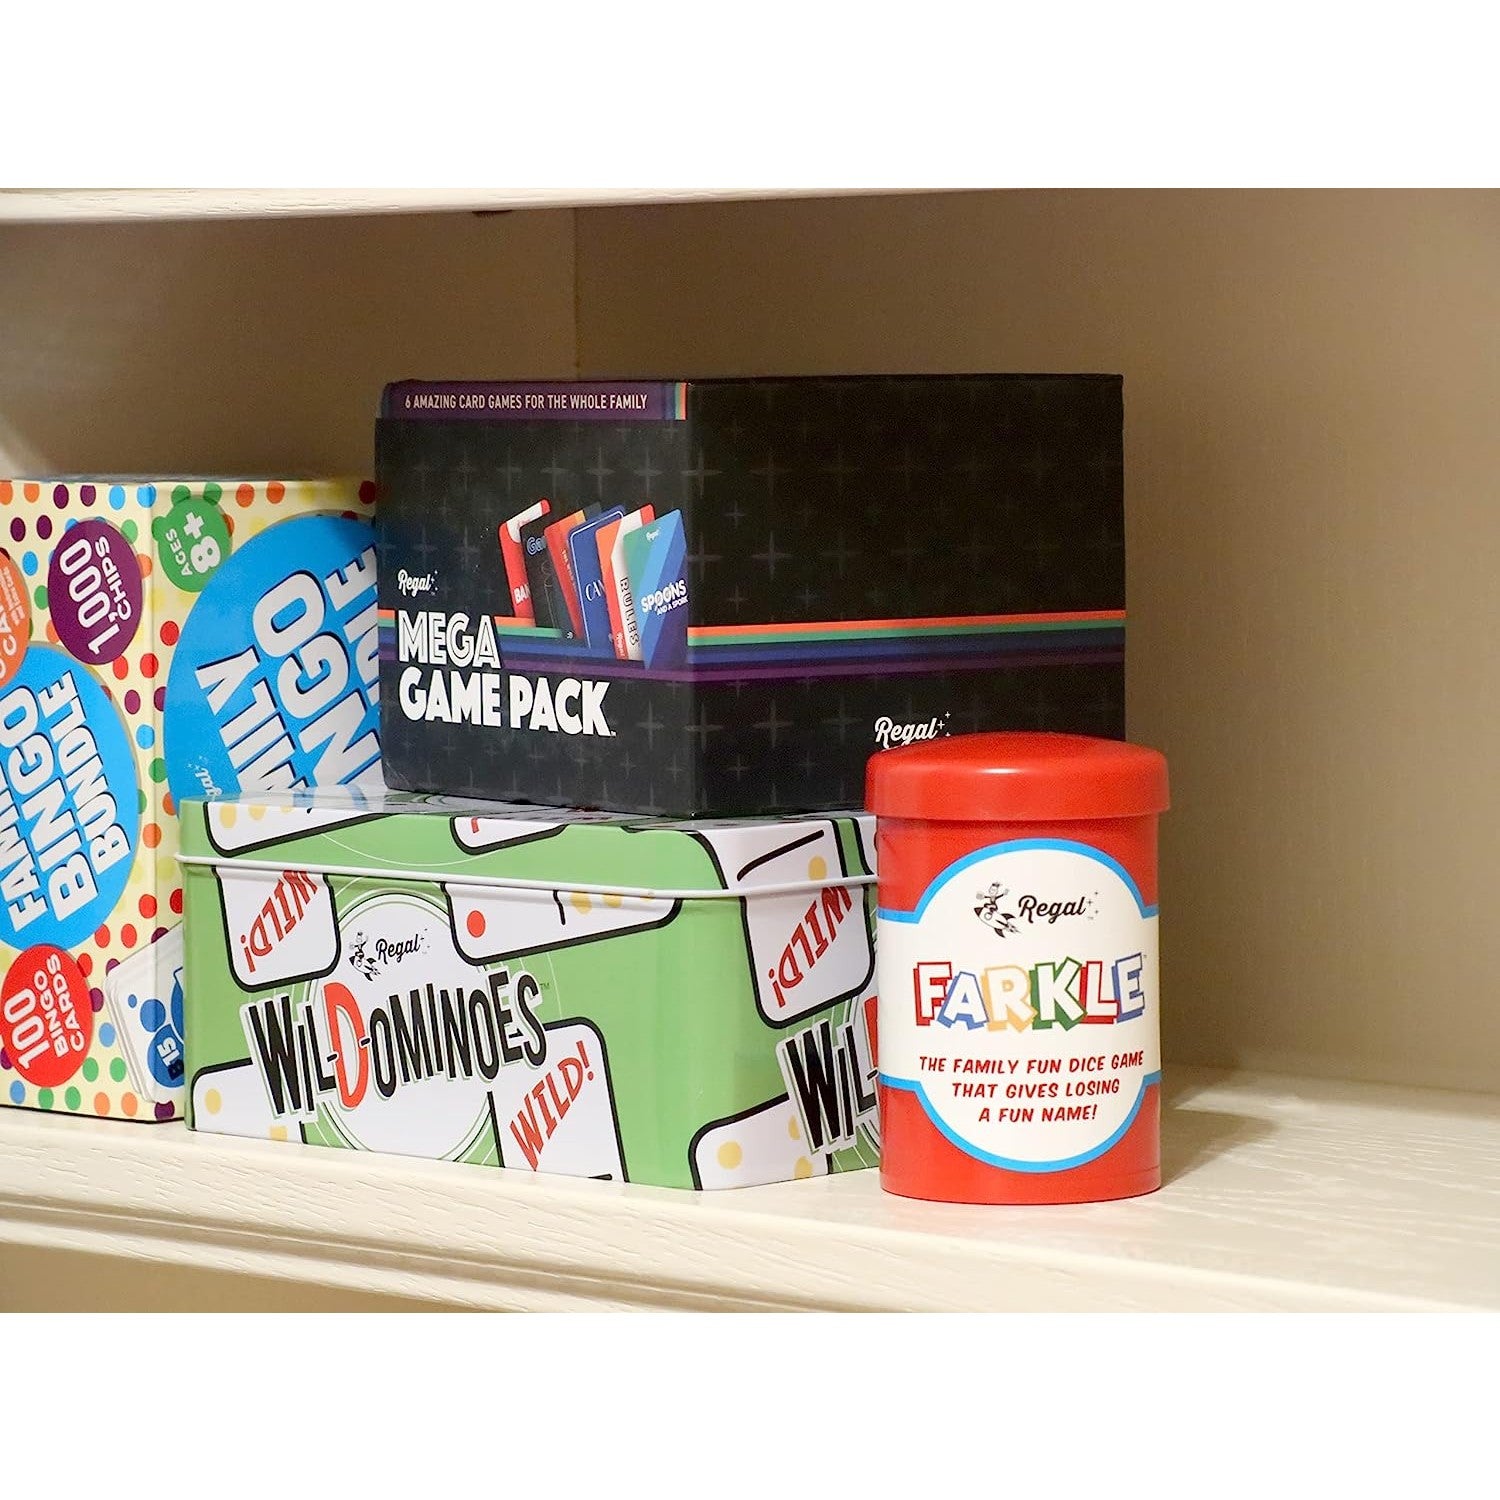 A Farkle dice game set on a shelf.